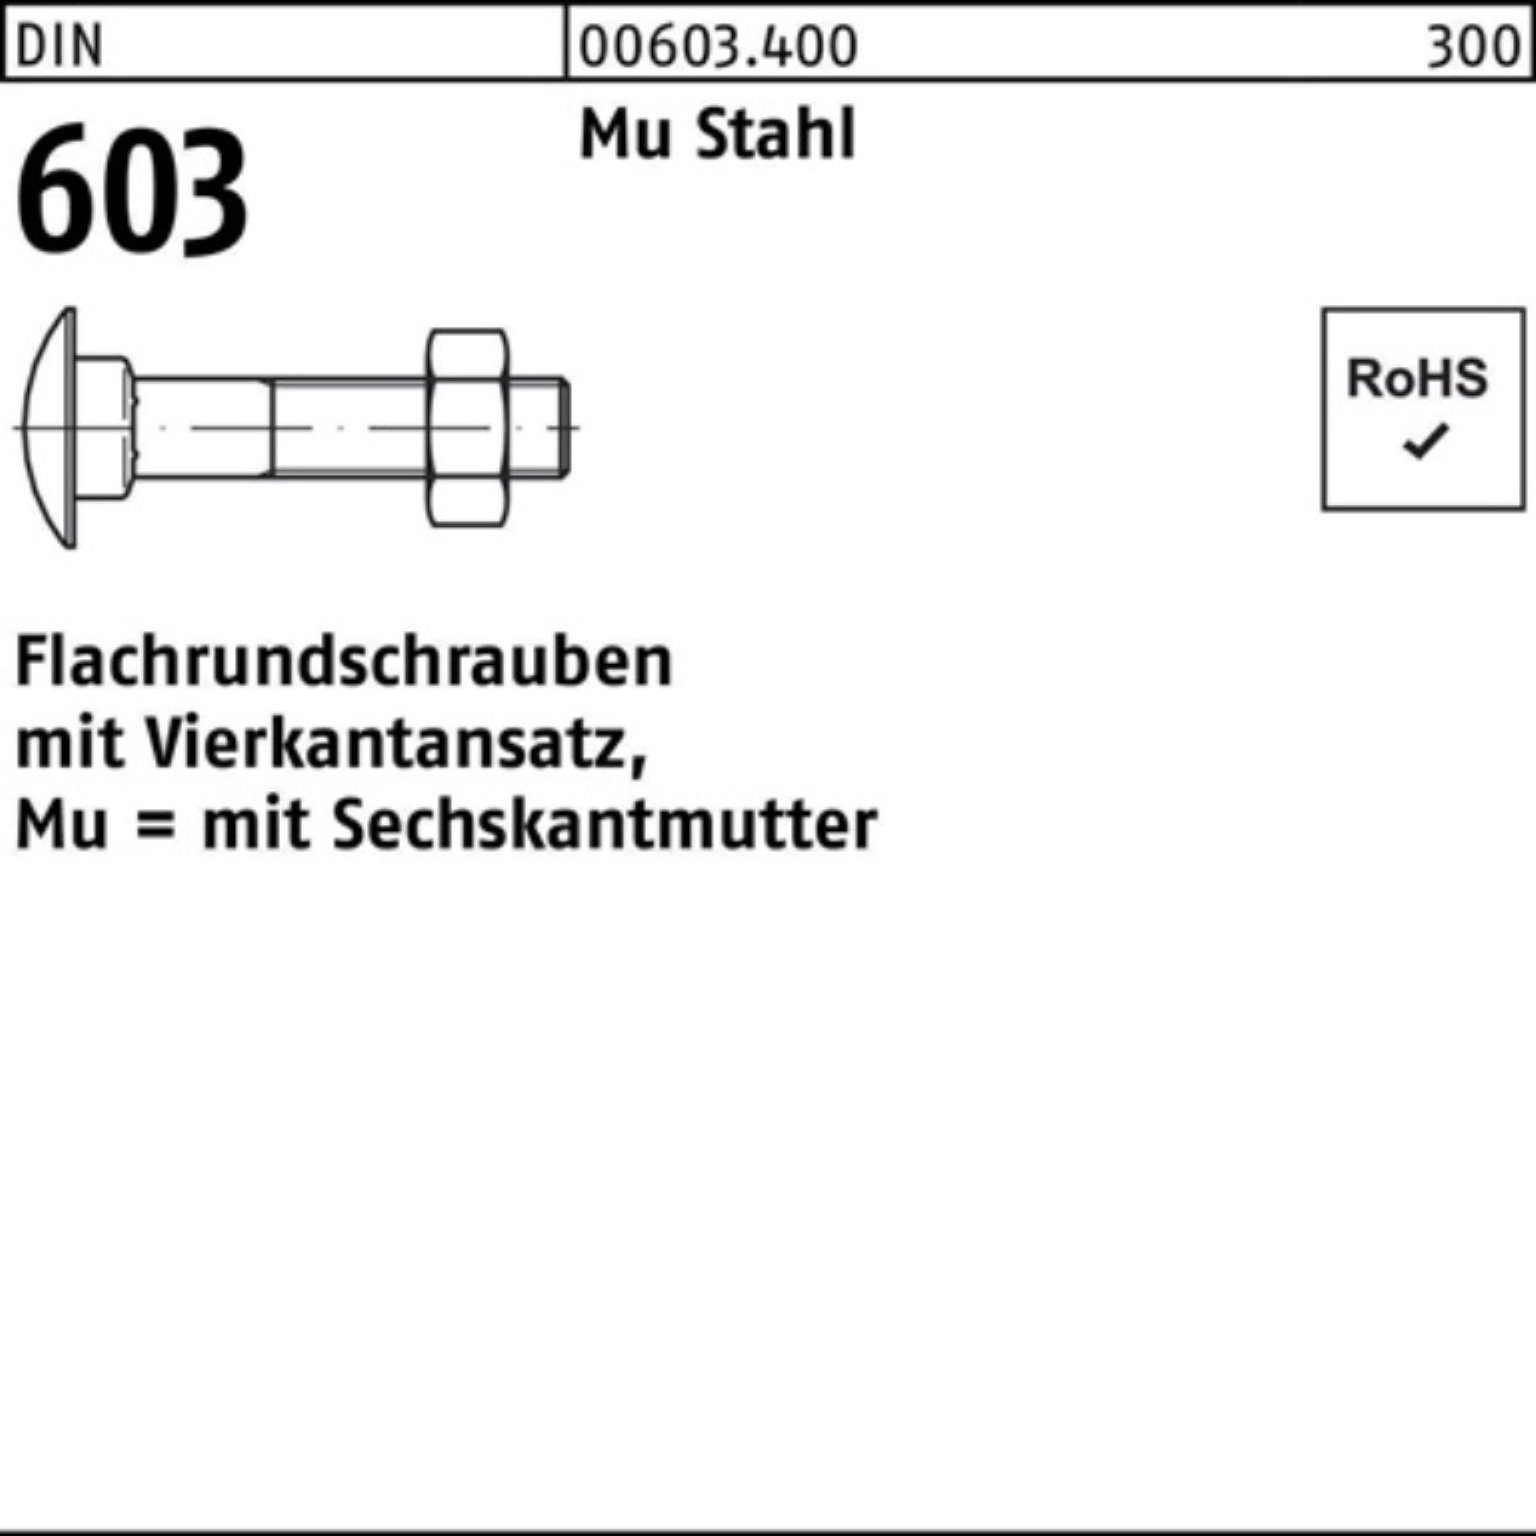 M6x80 Pack Vierkantansatz/6-ktmutter 603 Reyher M Schraube 200er Flachrundschraube DIN